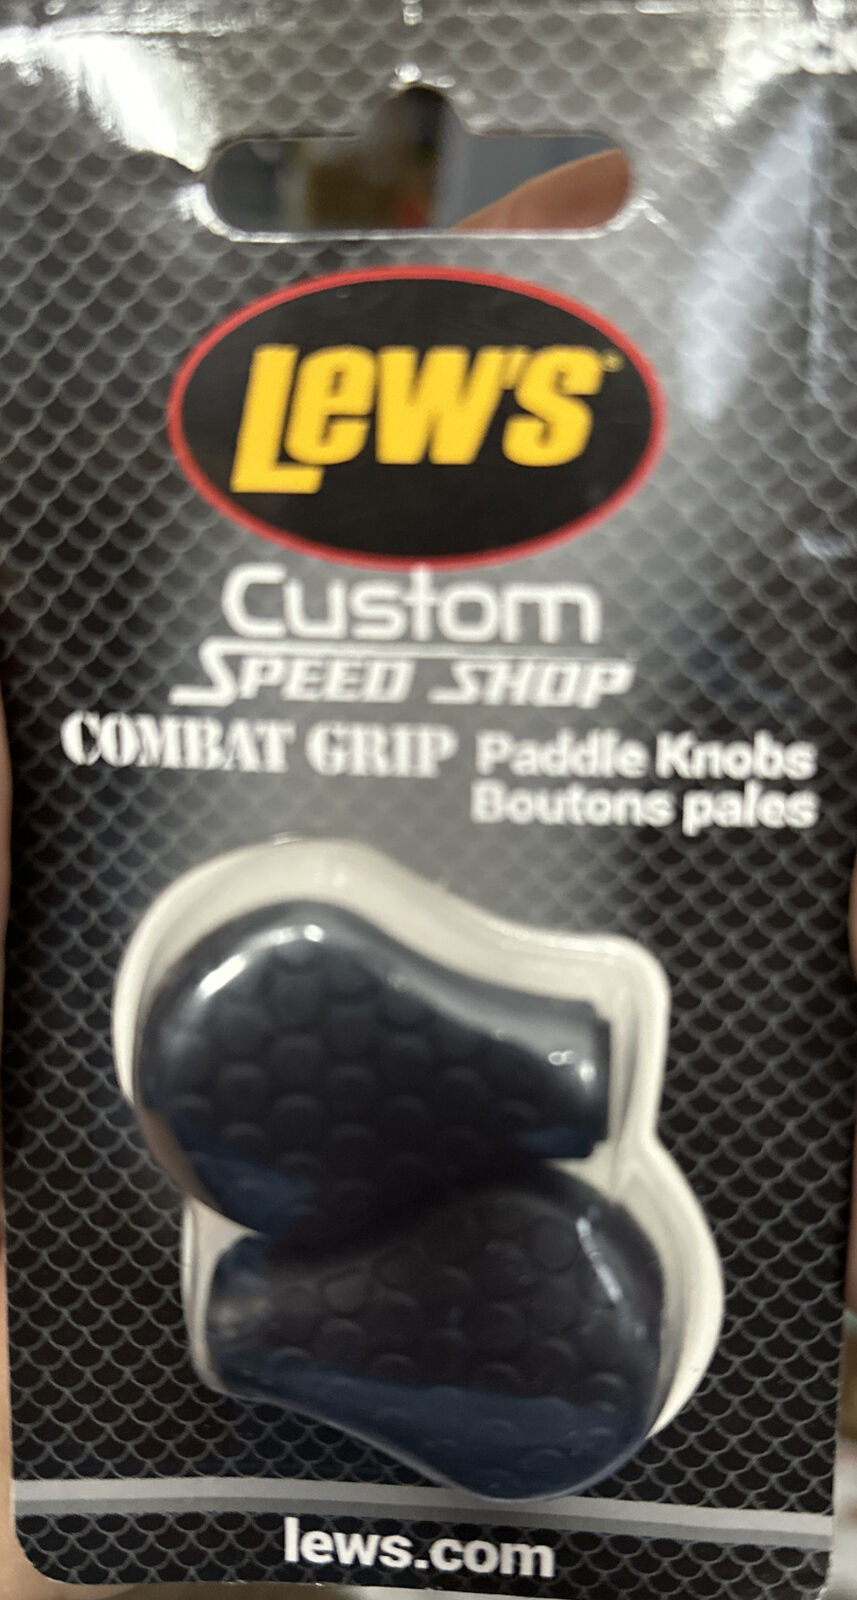 LEWS Combat Grip Custom Speed Shop Paddle Knobs for Baitcast